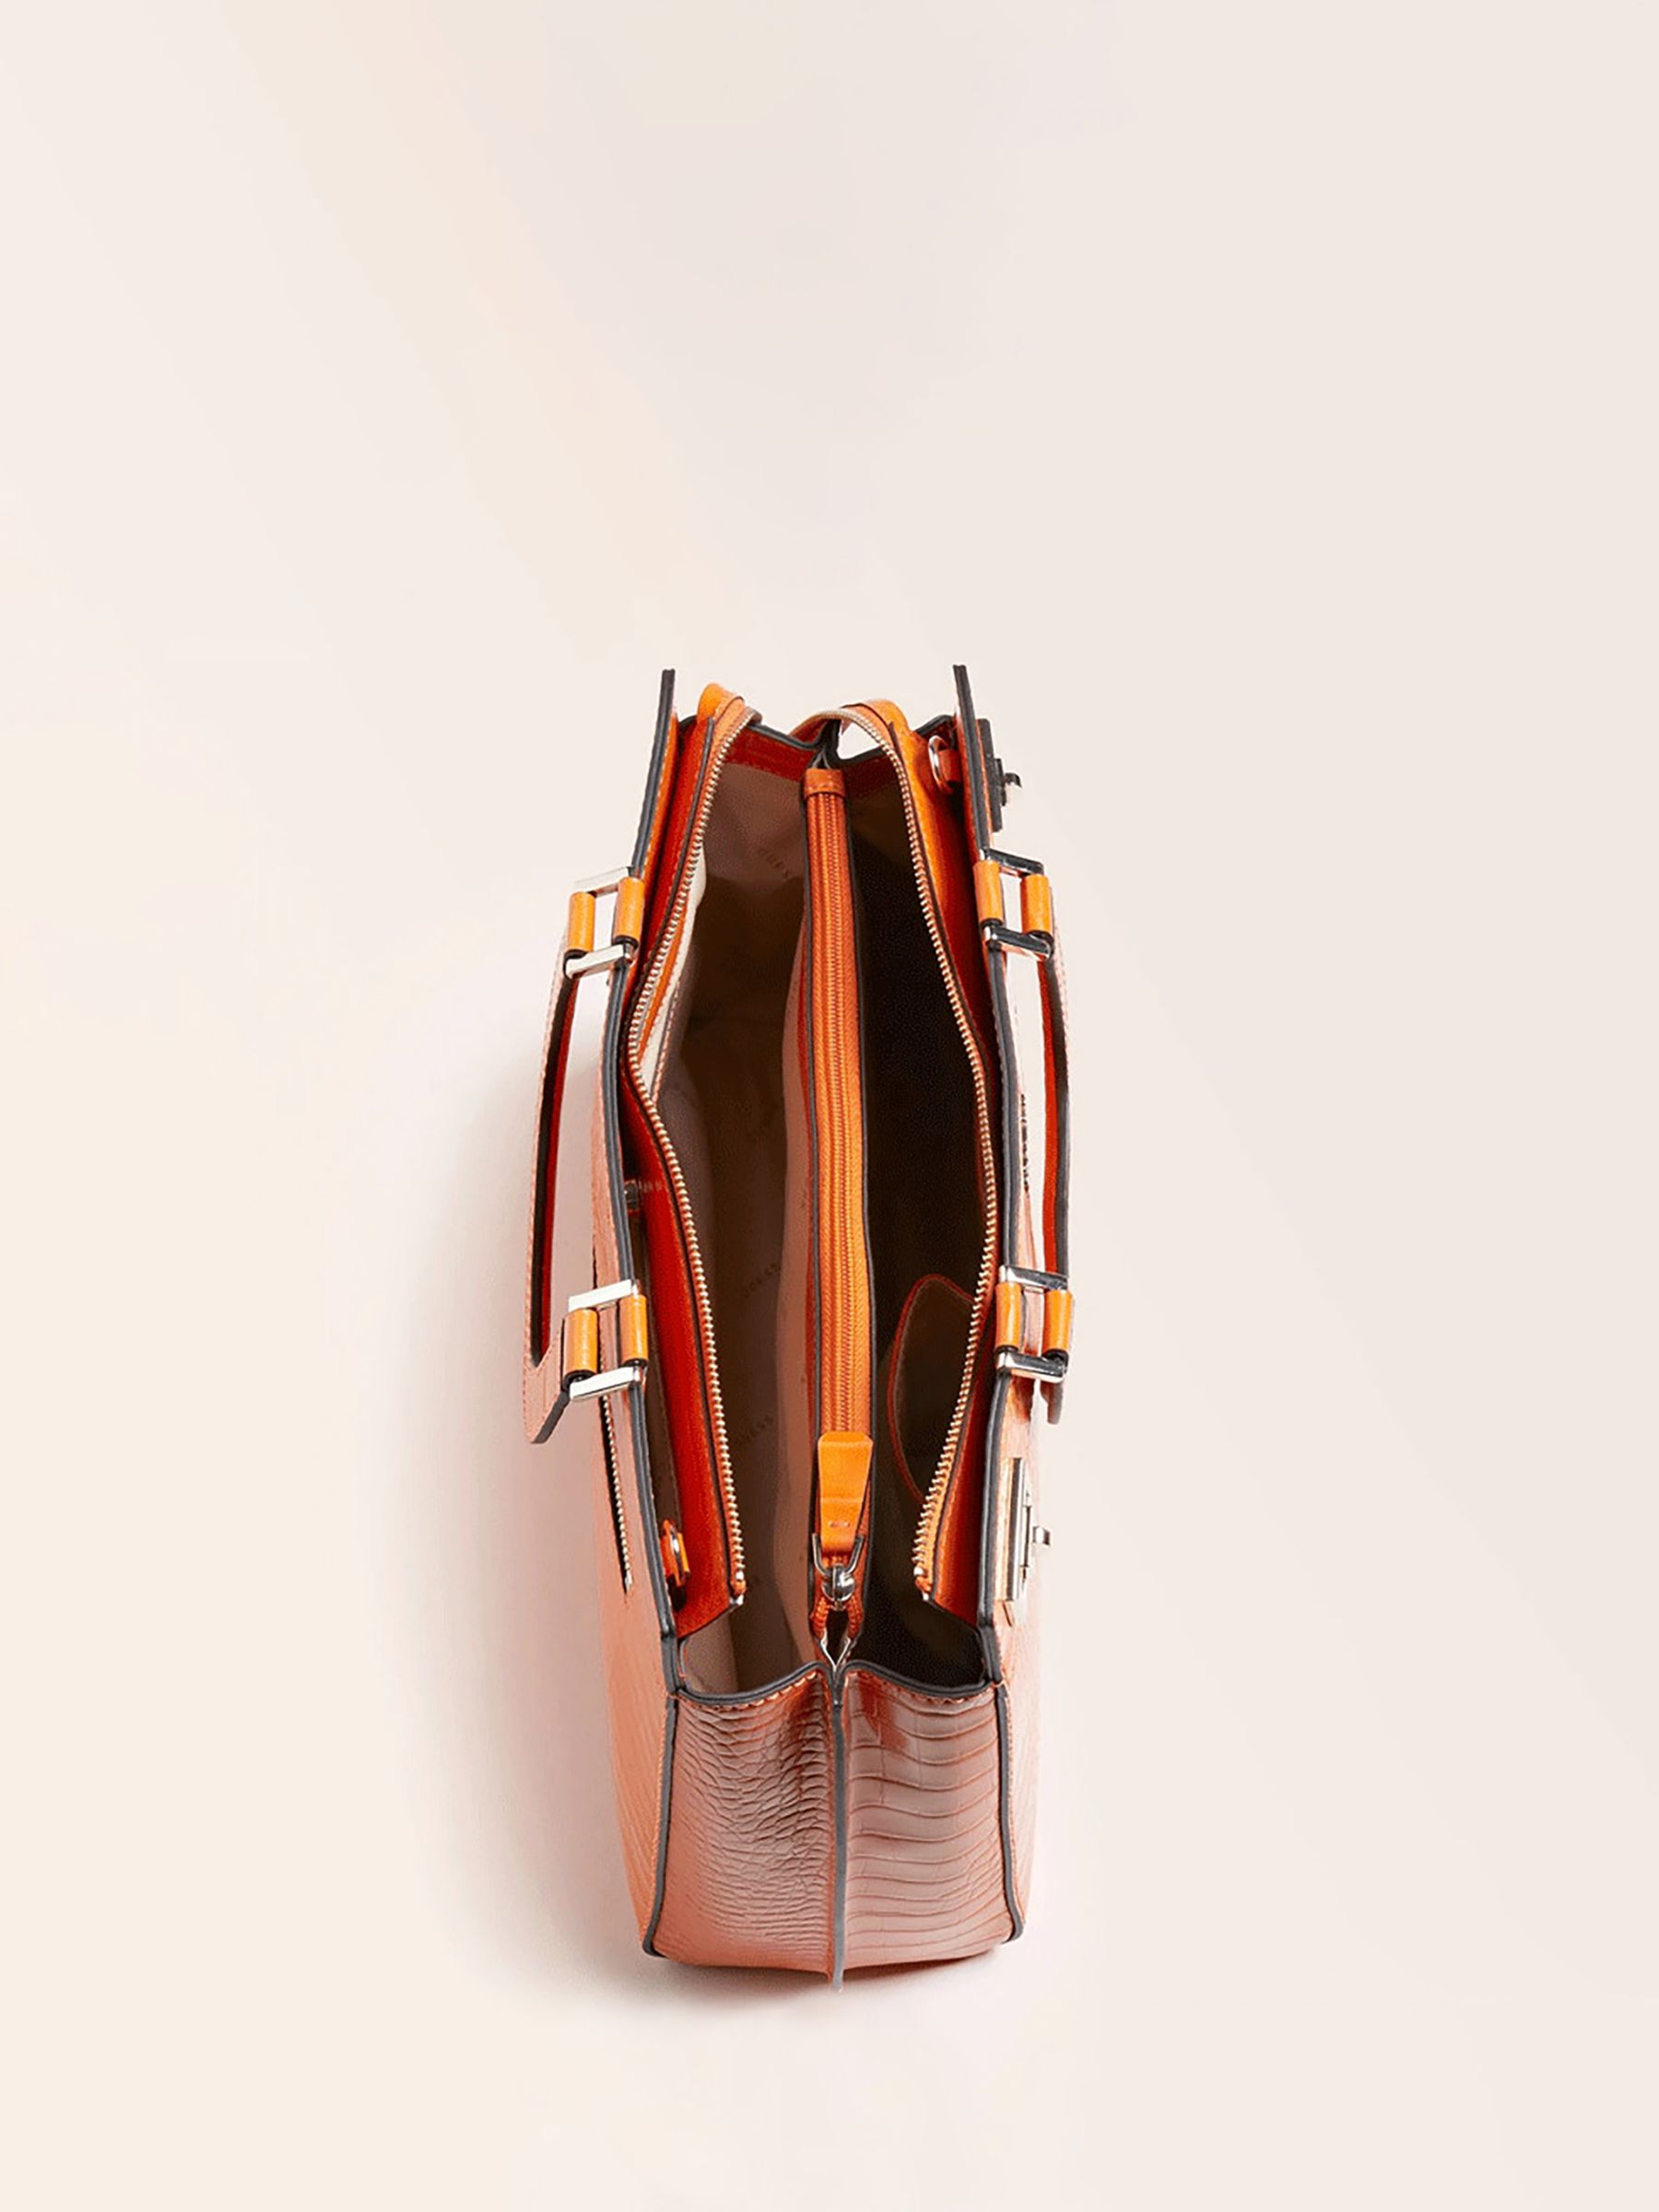 Buy GUESS Katey Luxury PU Zipper Closure Women's Casual Satchel Bag